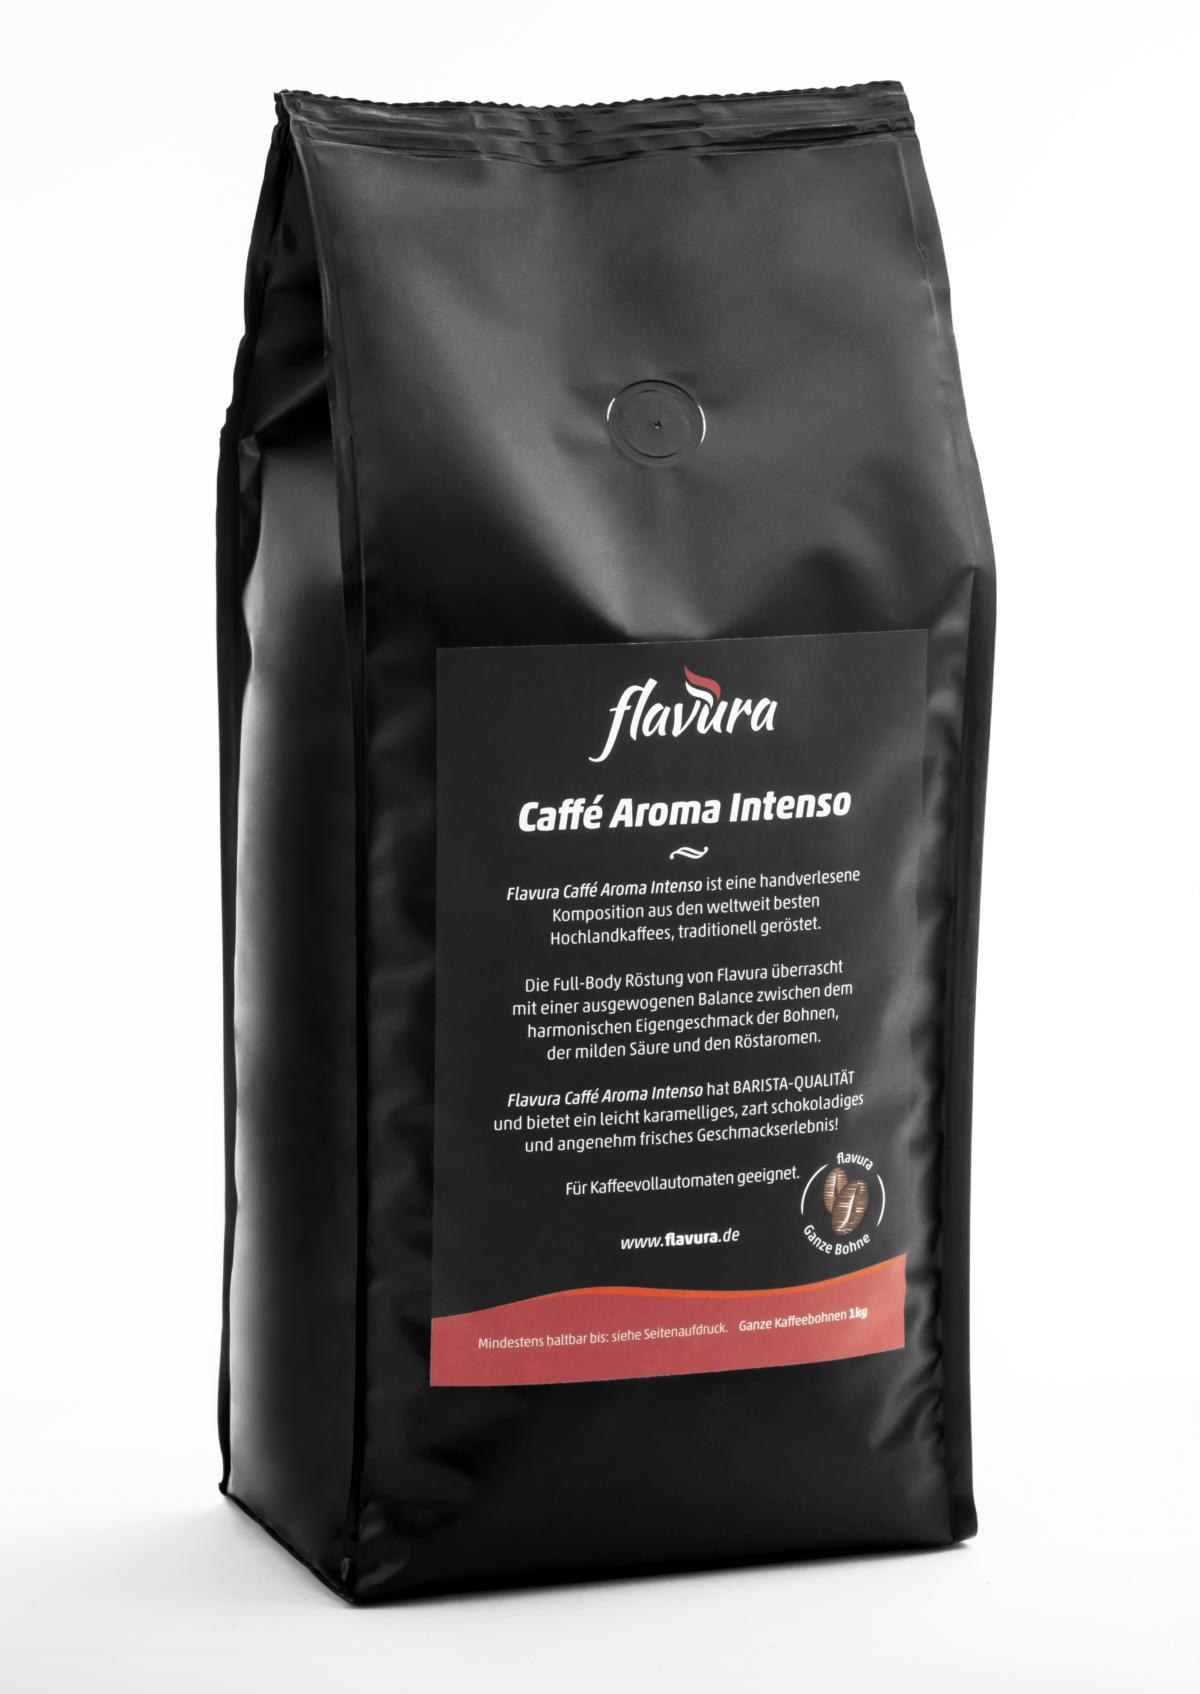 flavura-kaffee